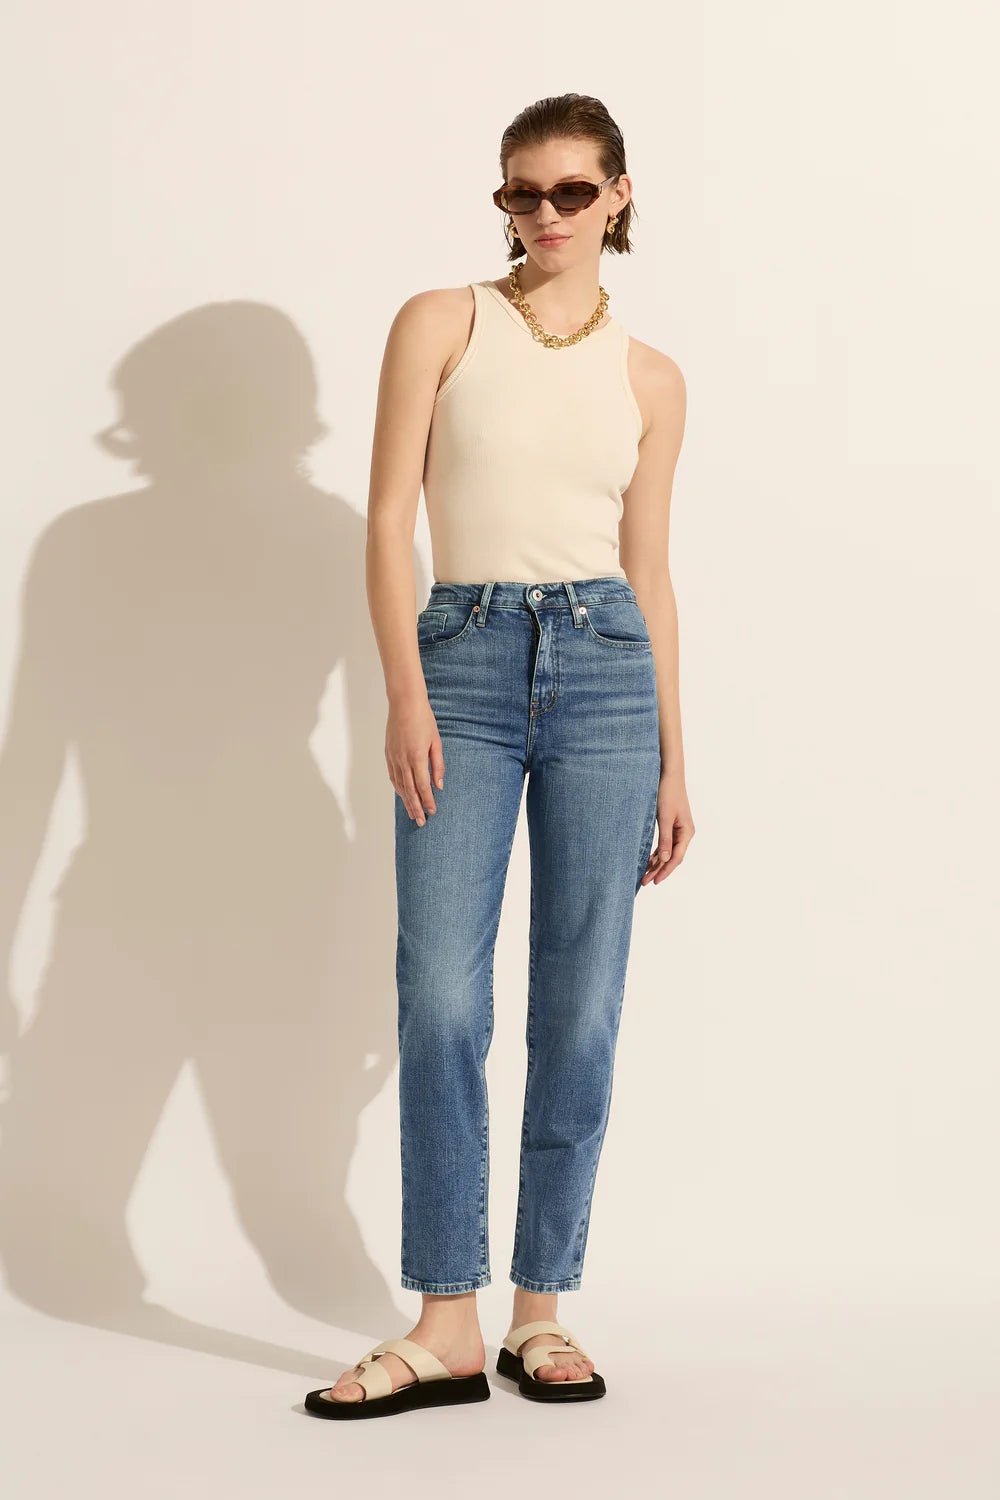 Shop Abigail High Rise Jeans | New Blue - Outland Denim